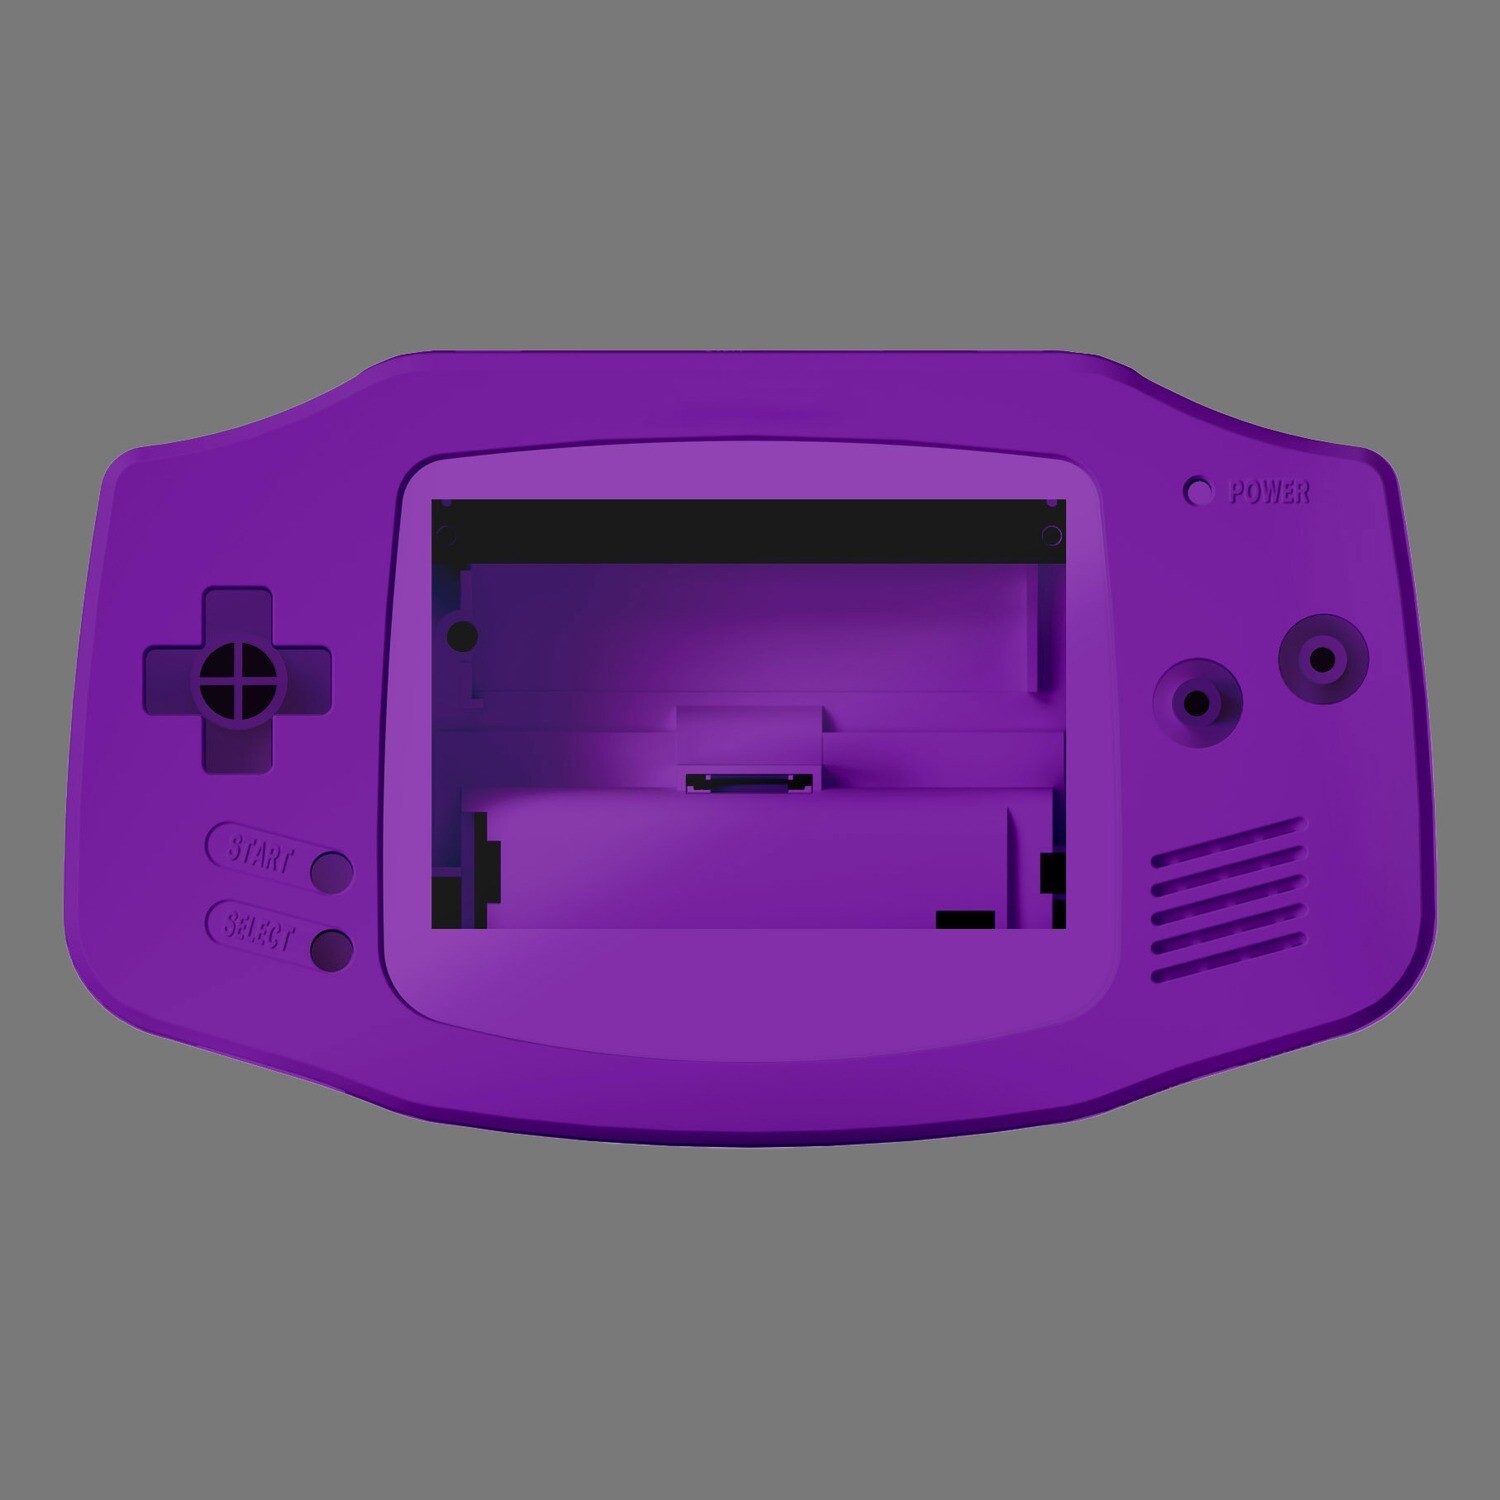 Game Boy Advance Shell (Solid Purple)